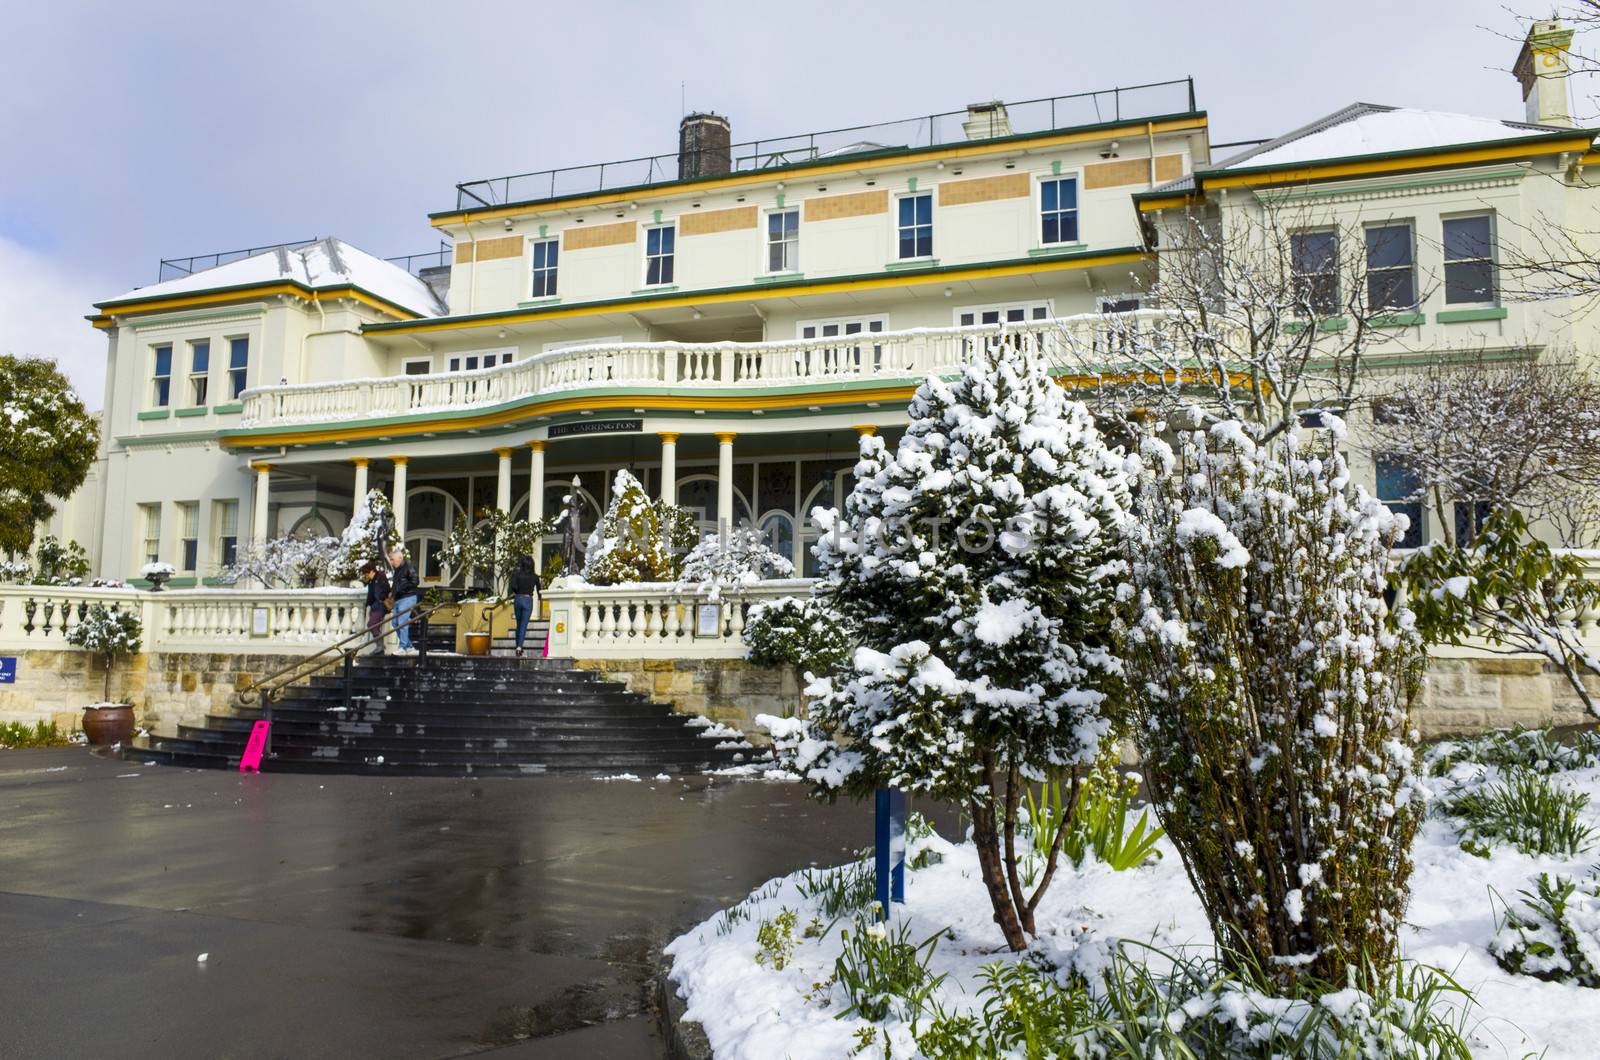 Katoomba, Blue Mountains, Australia, 10 August 2019: The historic Carrington Hotel in Katoomba after a winter snowfall